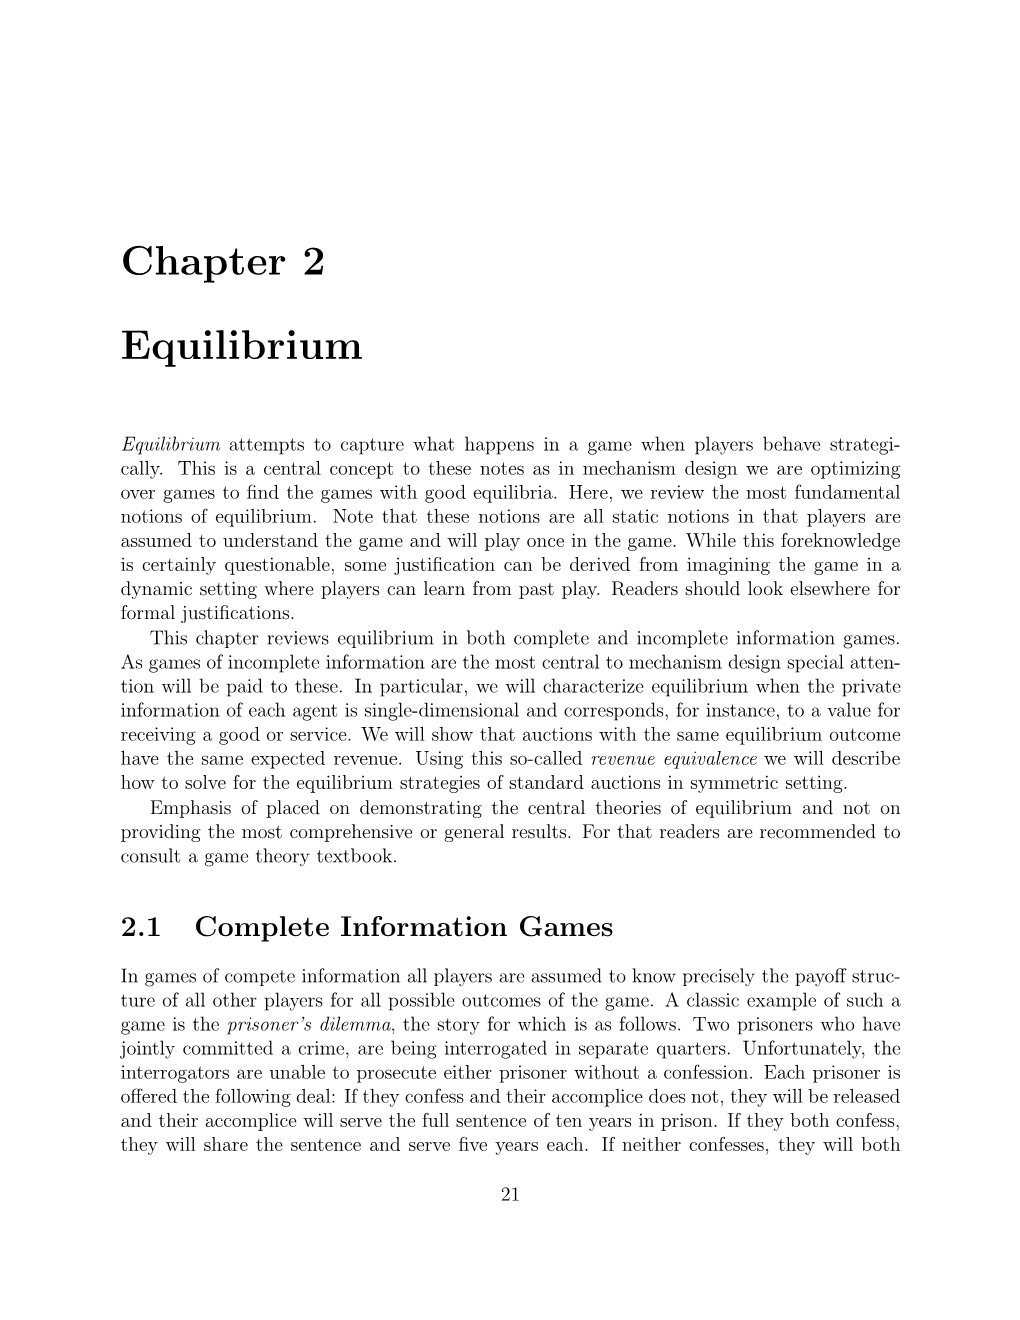 Chapter 2 Equilibrium